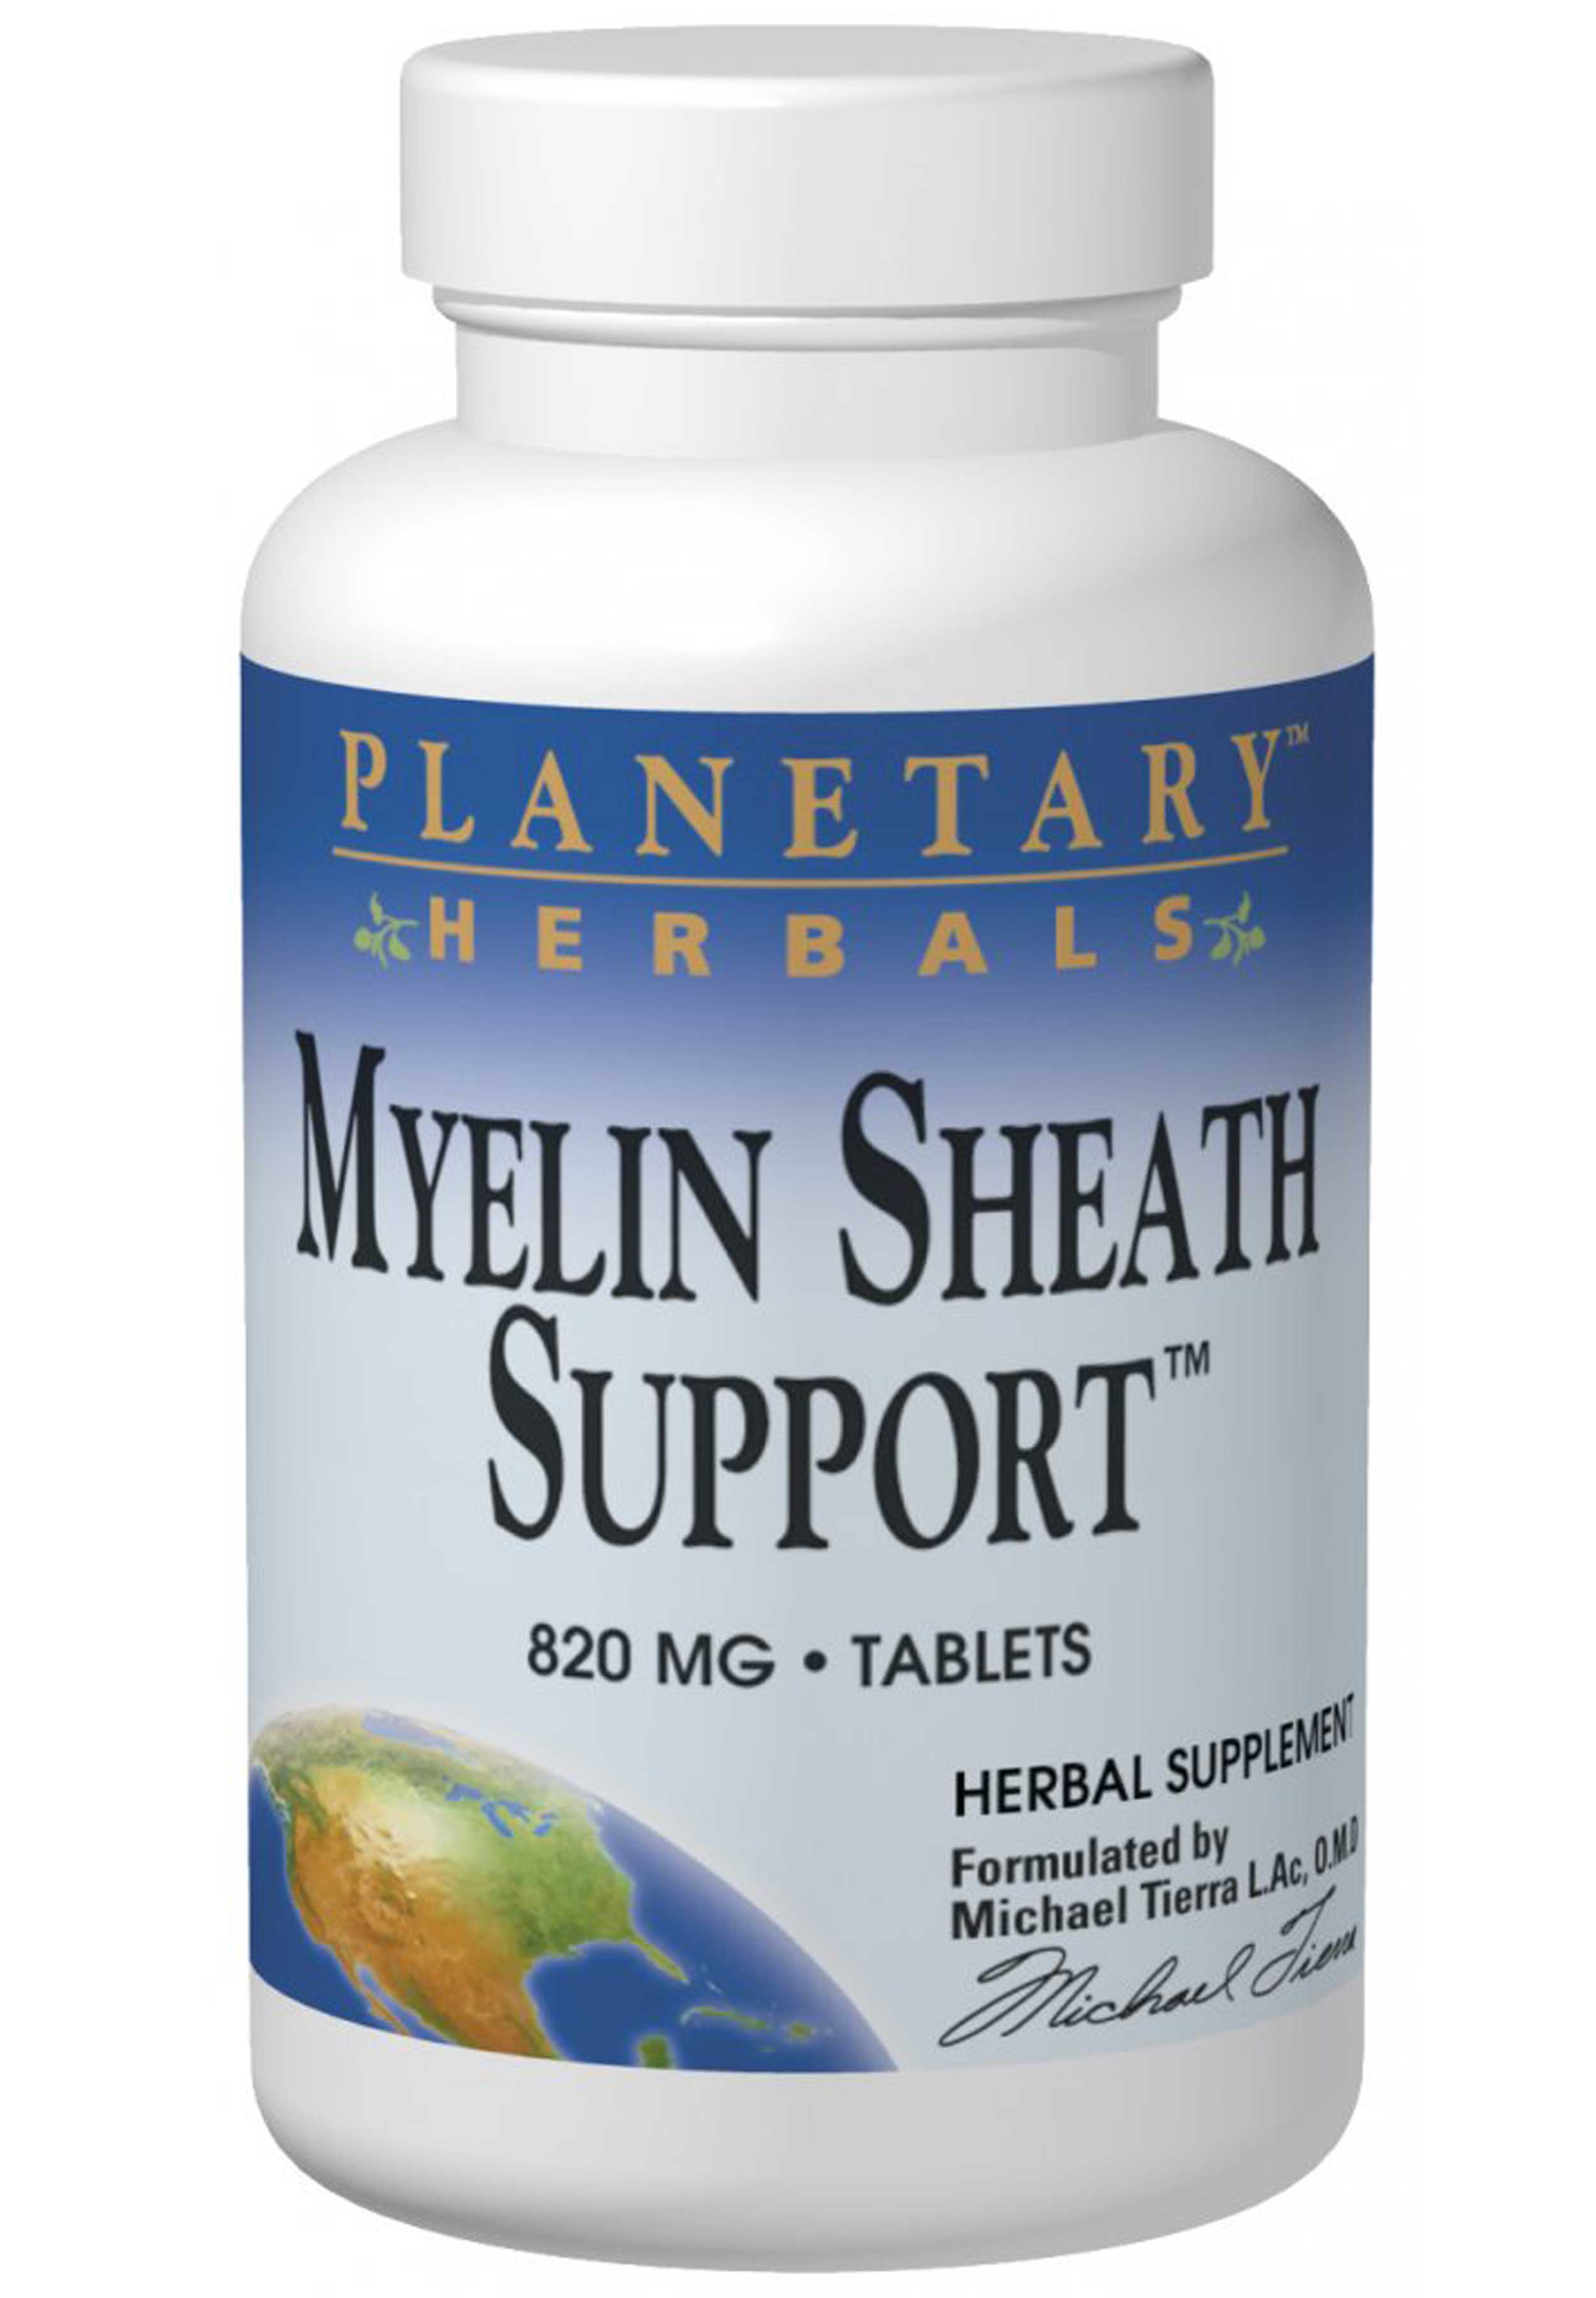 Planetary Herbals Myelin Sheath Support